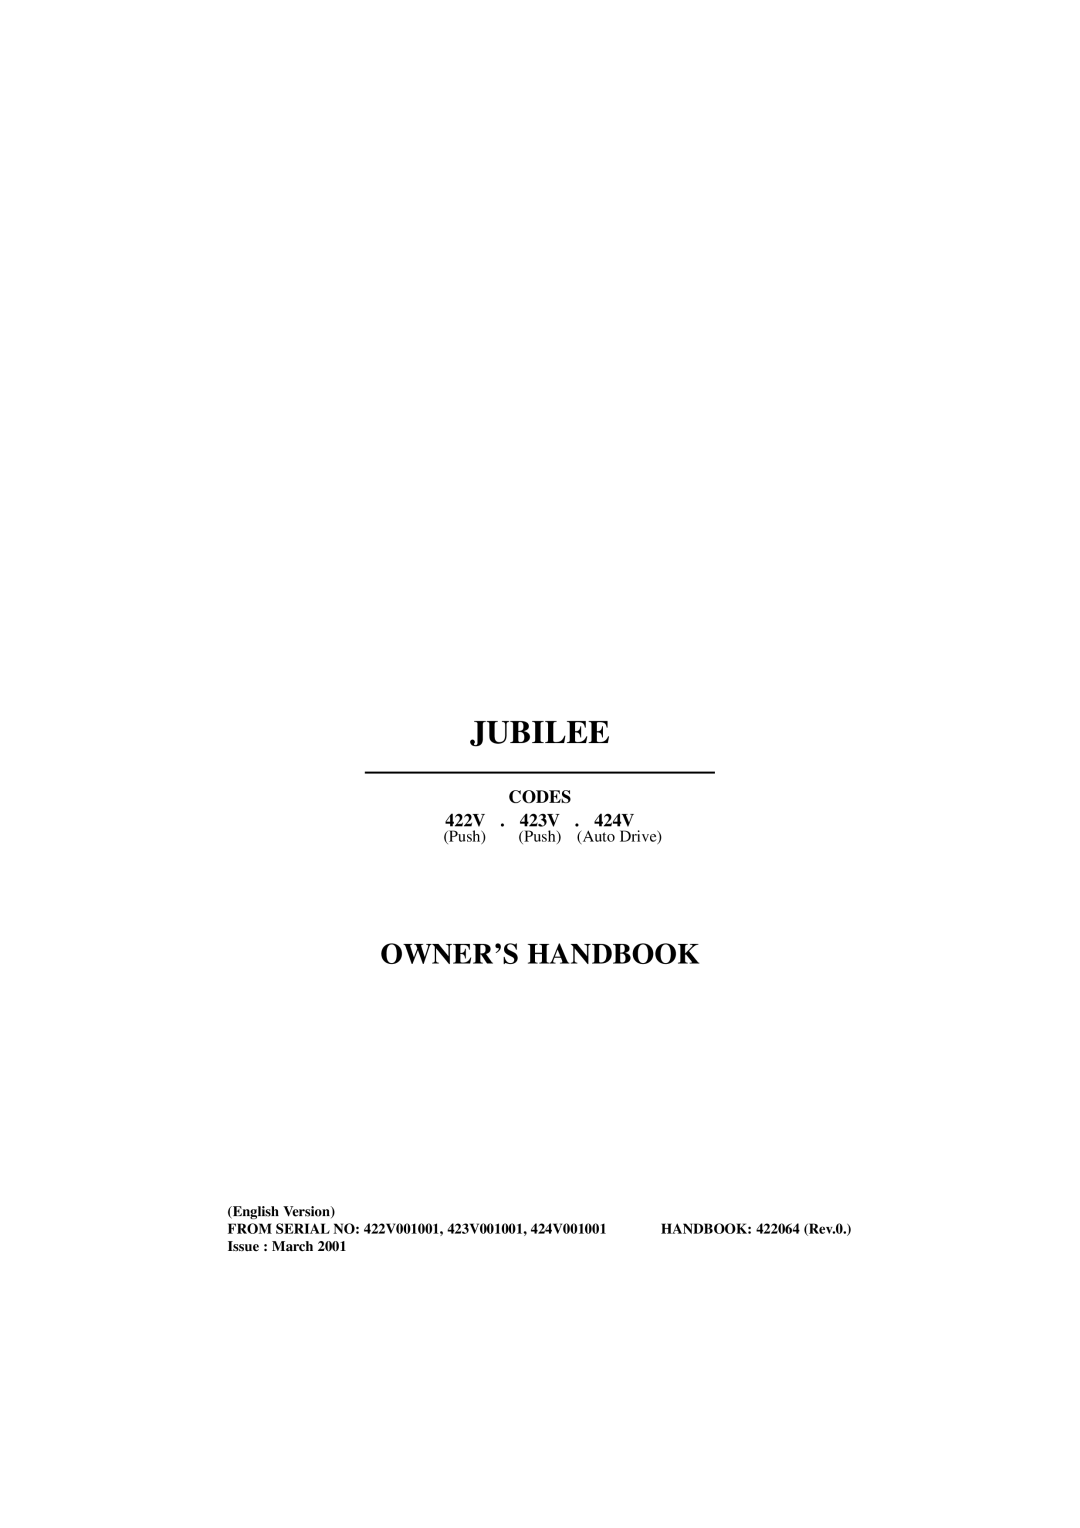 Hayter Mowers 423V, 422V, 424V manual English Version, From Serial No, Issue March, Jubilee, Owner’S Handbook, Codes, Push 